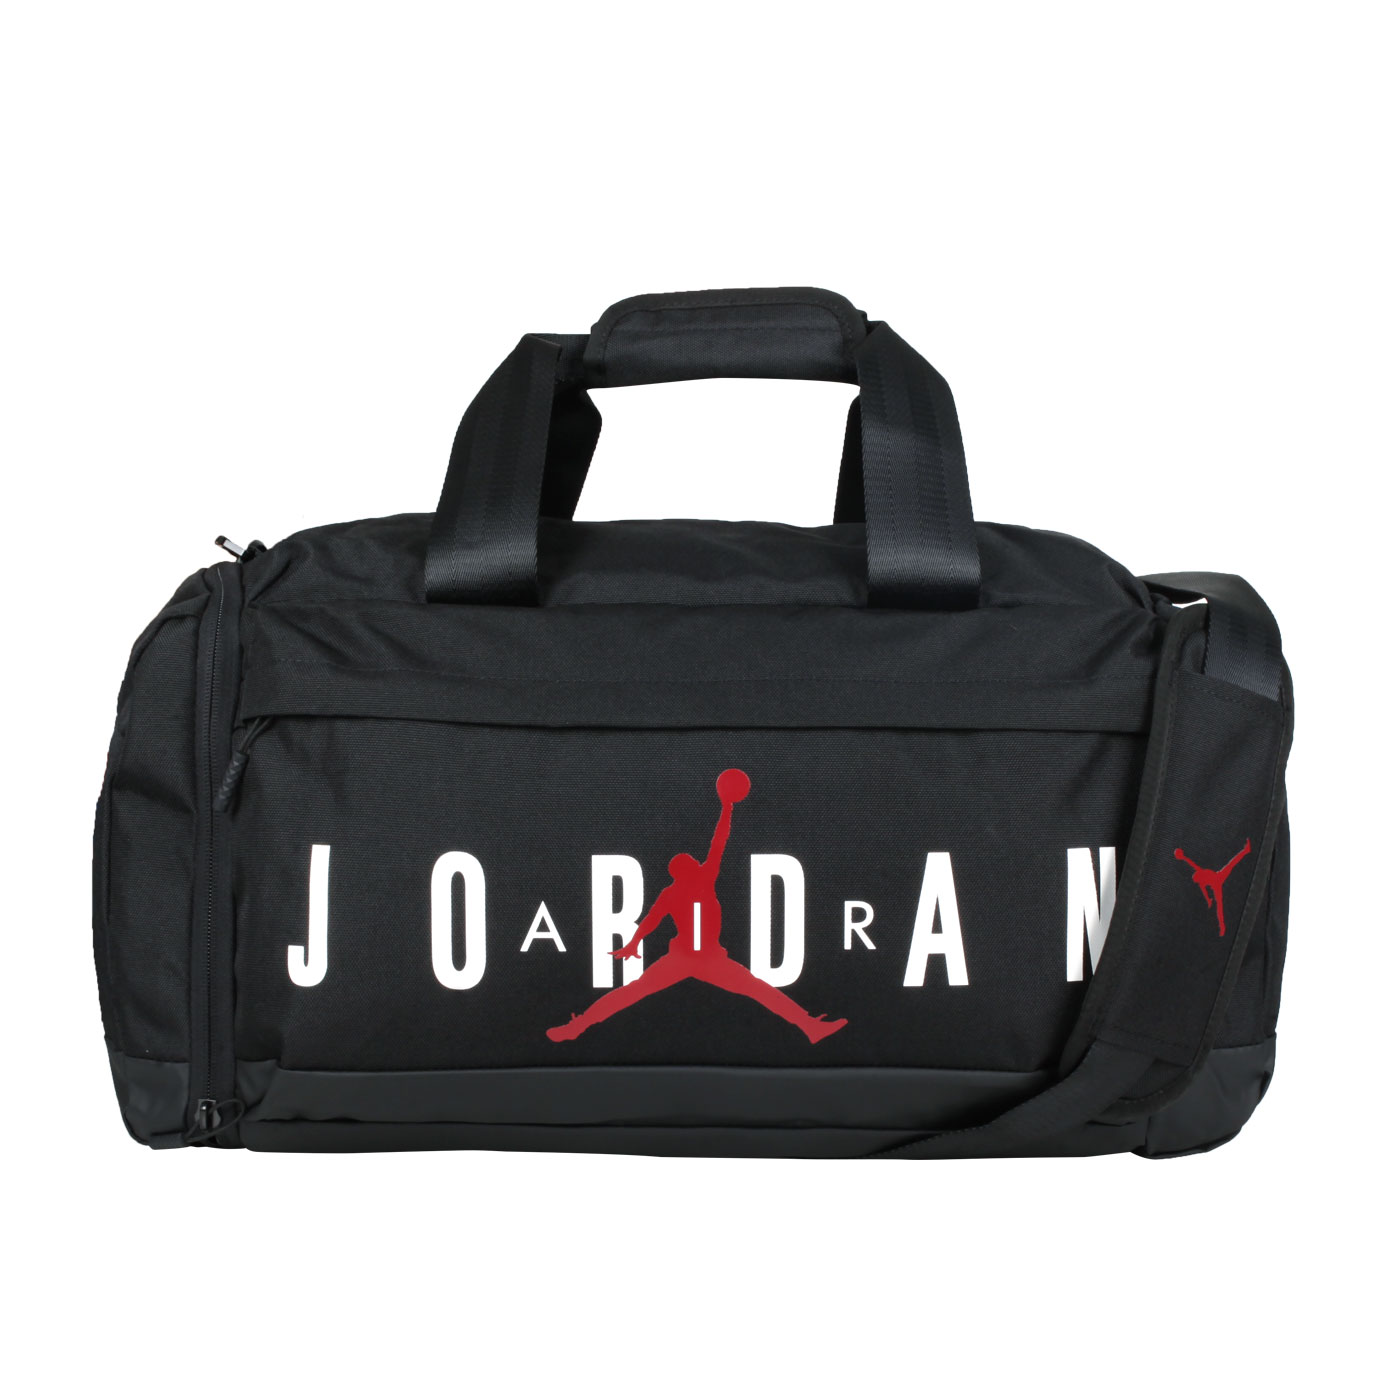 NIKE JORDAN行李包 JD2223024GS-002 - 黑白紅